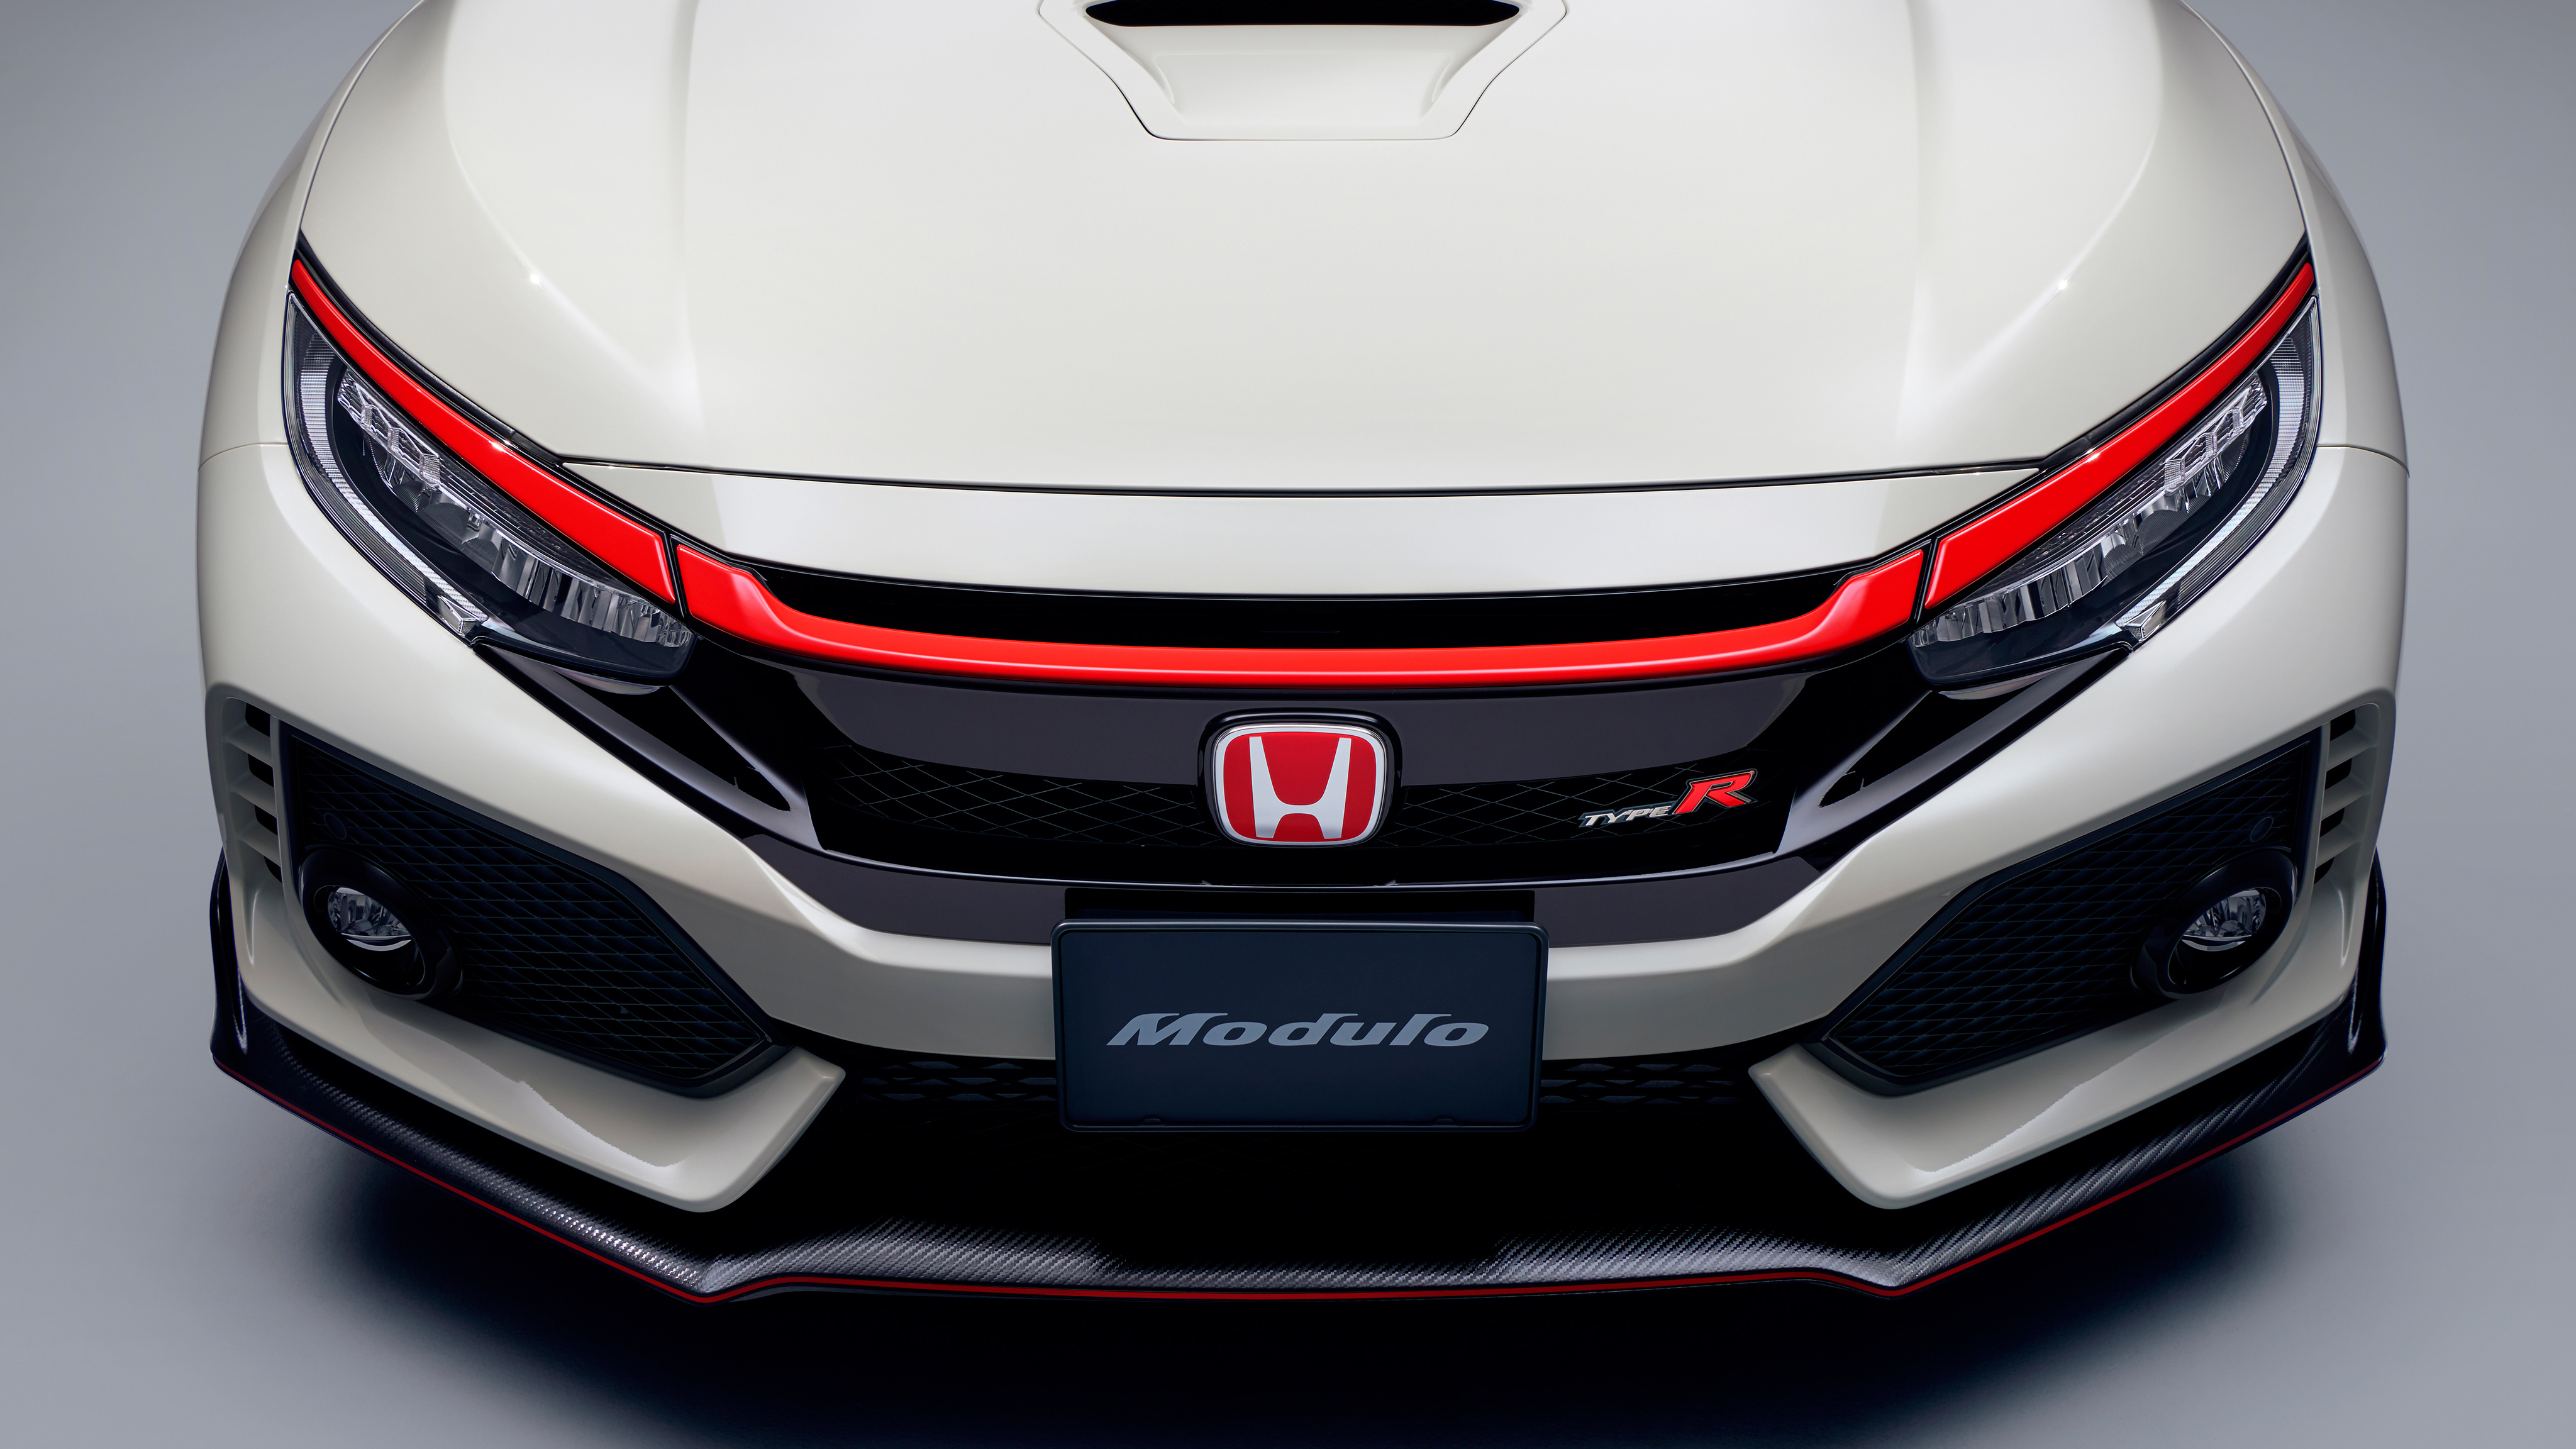 Modulo Honda Civic Type R 2017 Wallpaper | HD Car ...